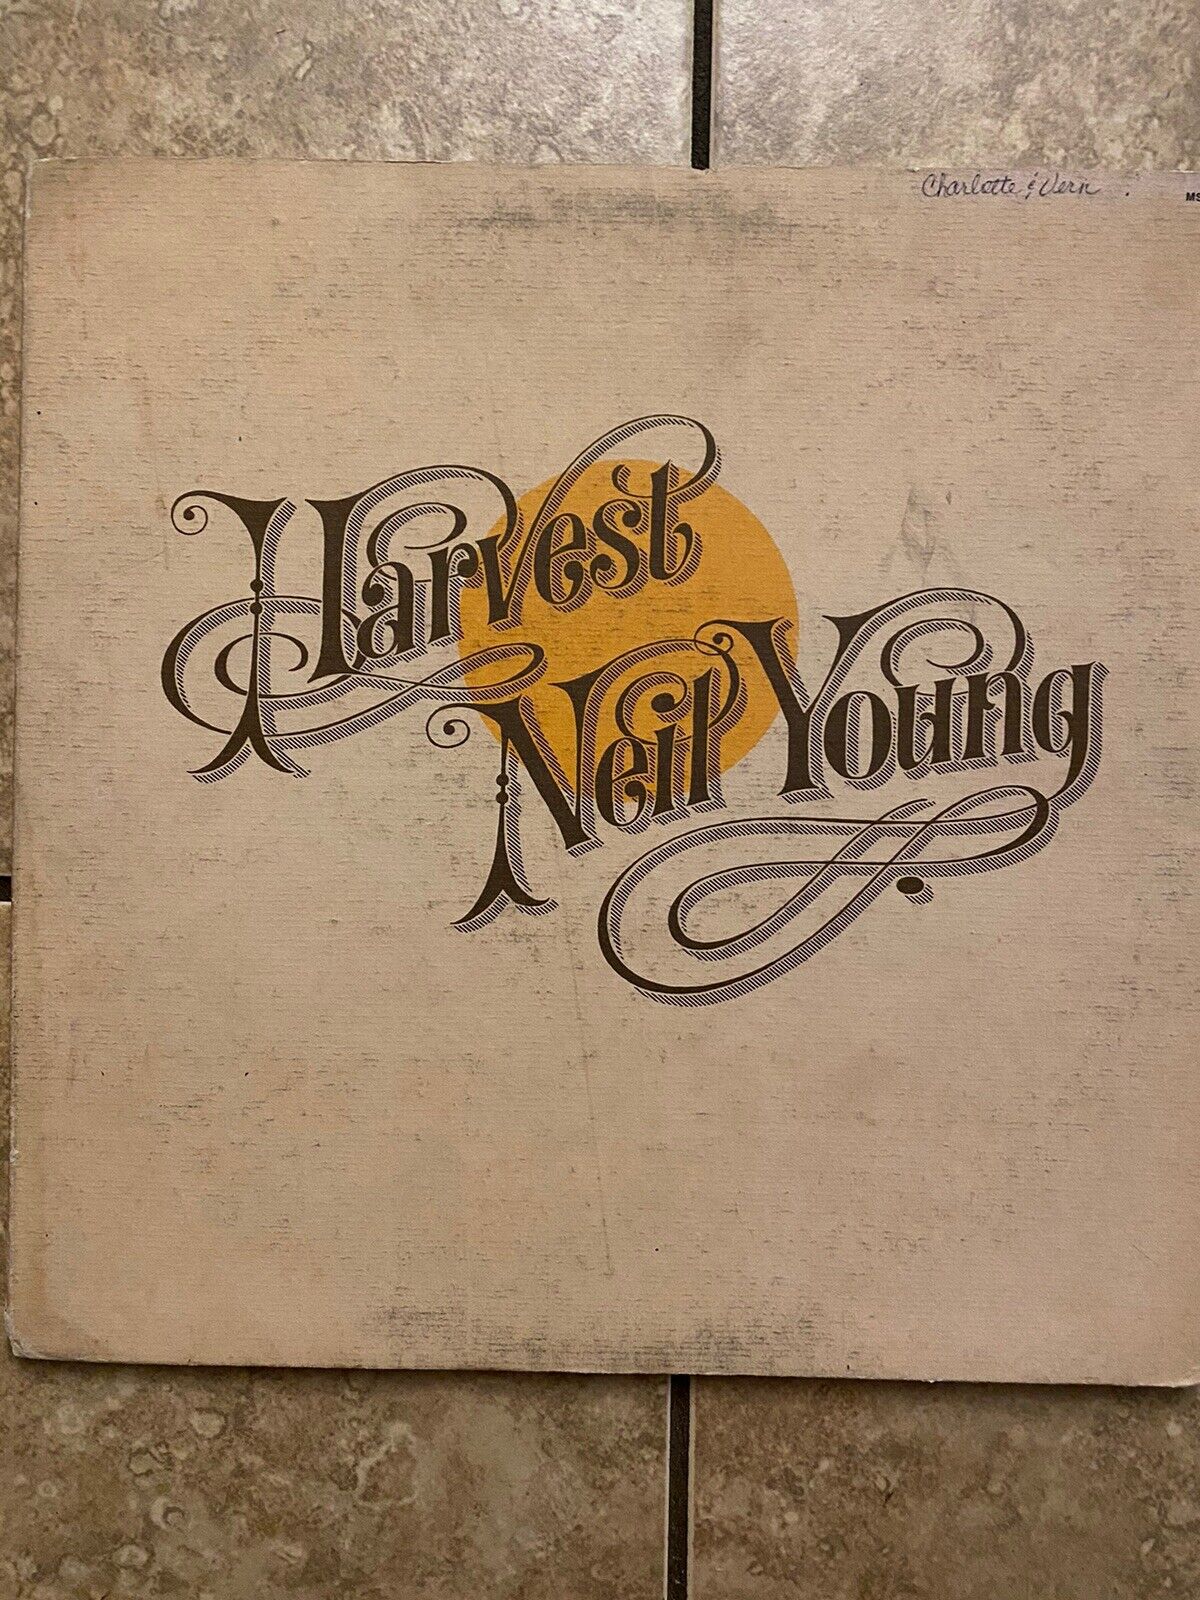 Neil Young Harvest (Reprise 1972 MS 2032 Stereo) Gatefold Vinyl LP Record